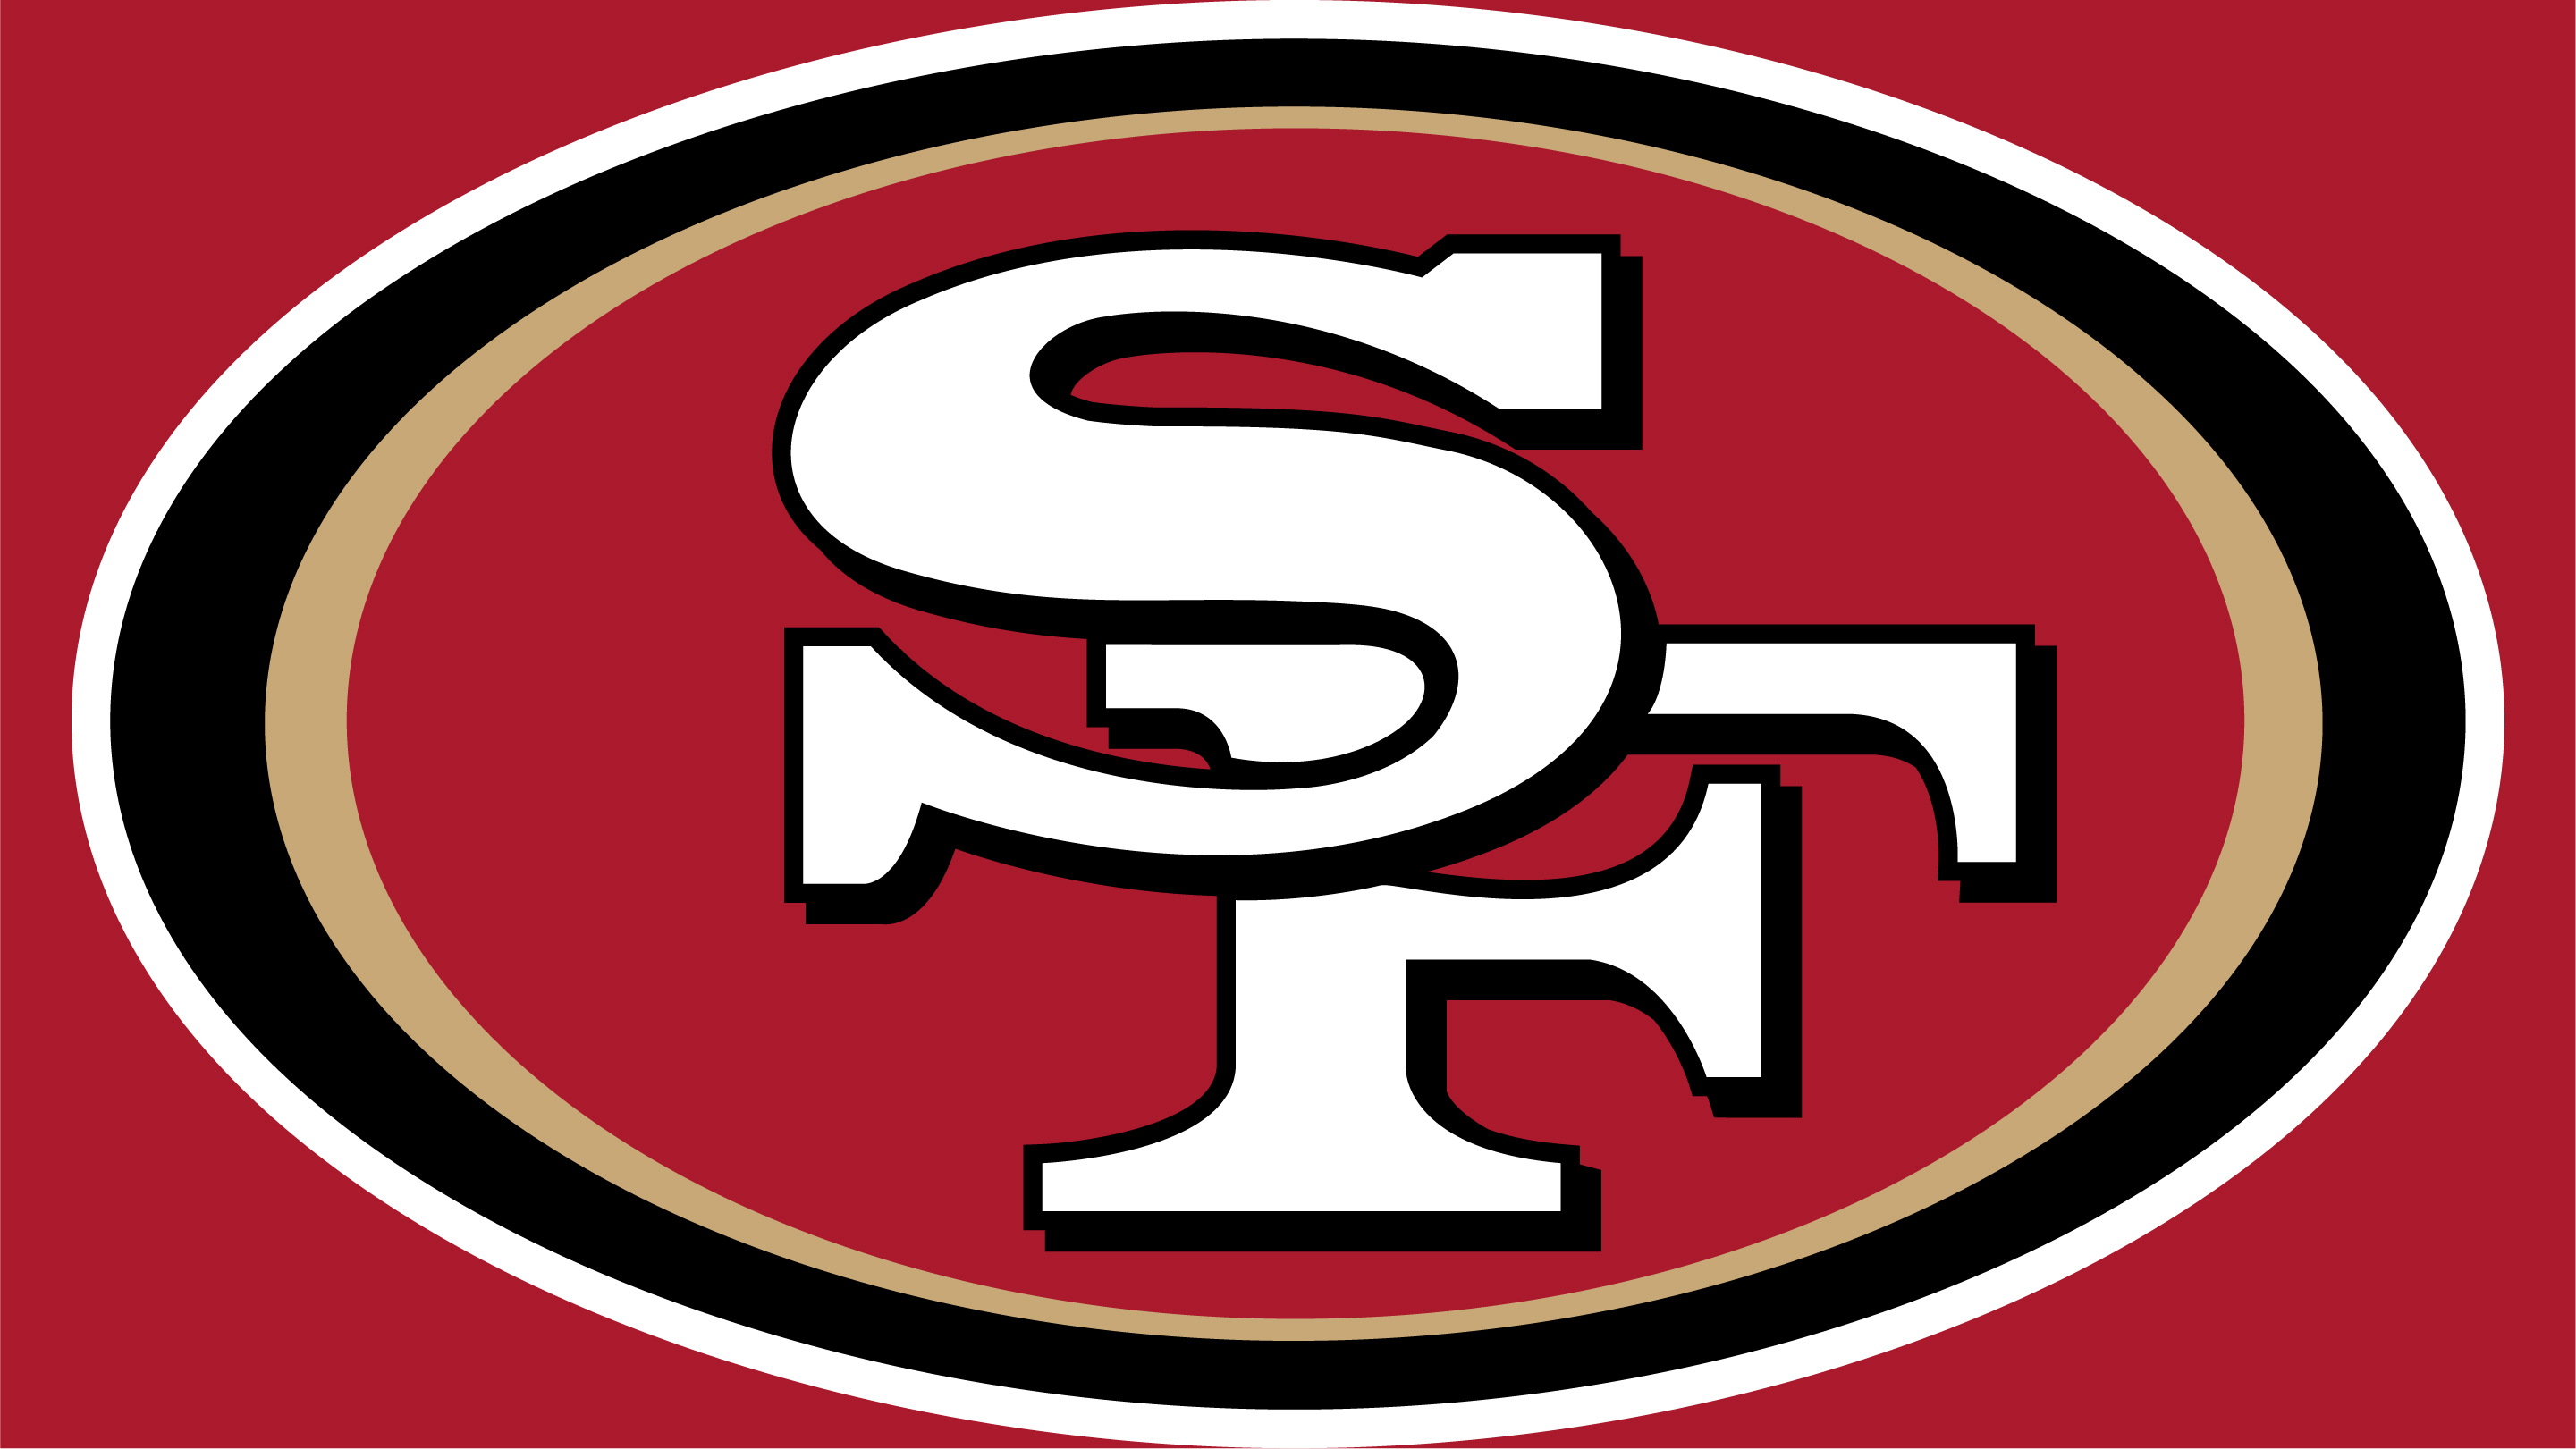 Logo Brands San Francisco 49ers 24-Can Cooler Bag • Price »